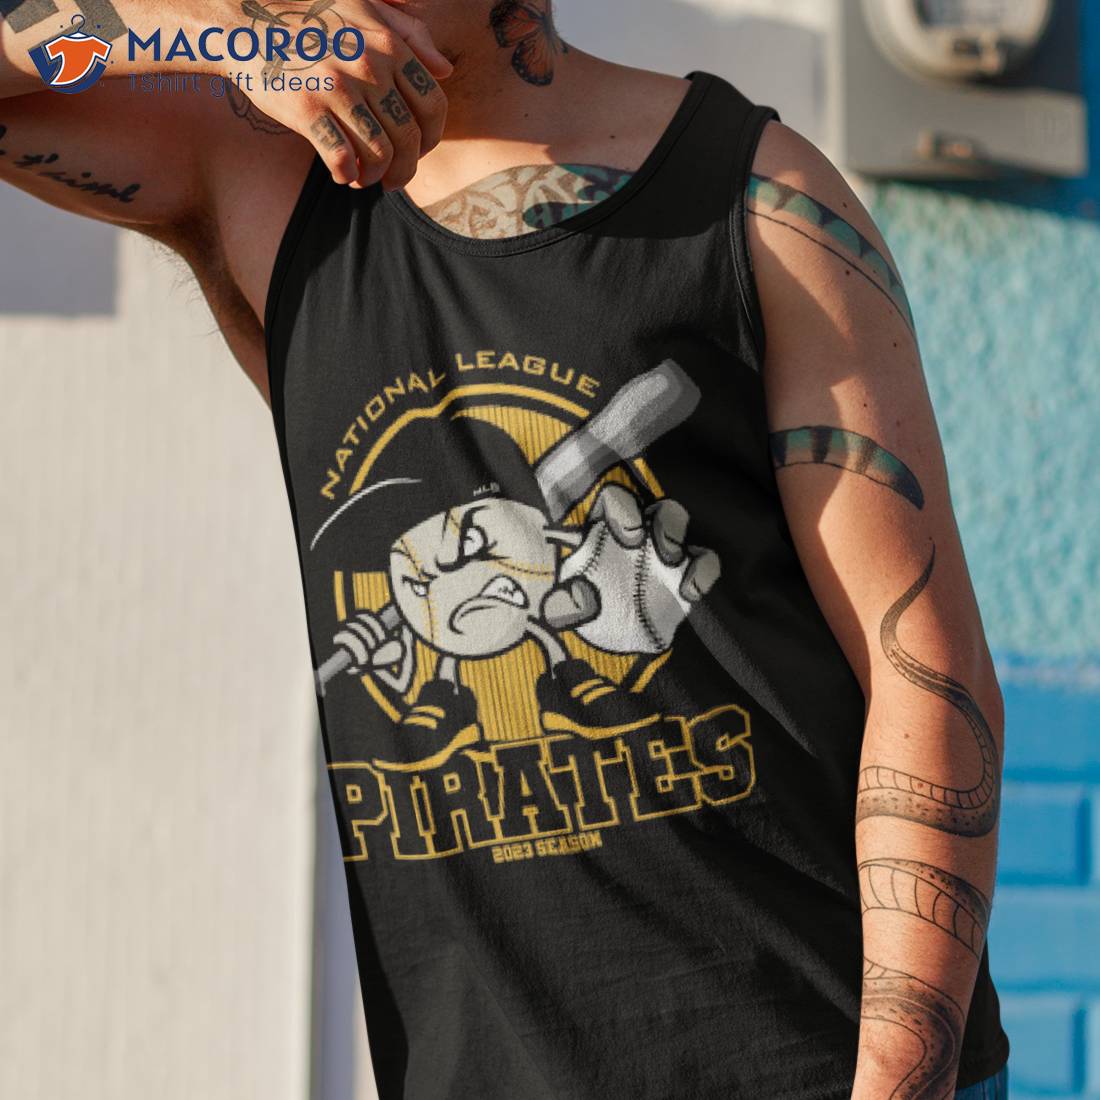 16 Pittsburgh Pirates Tattoos ideas